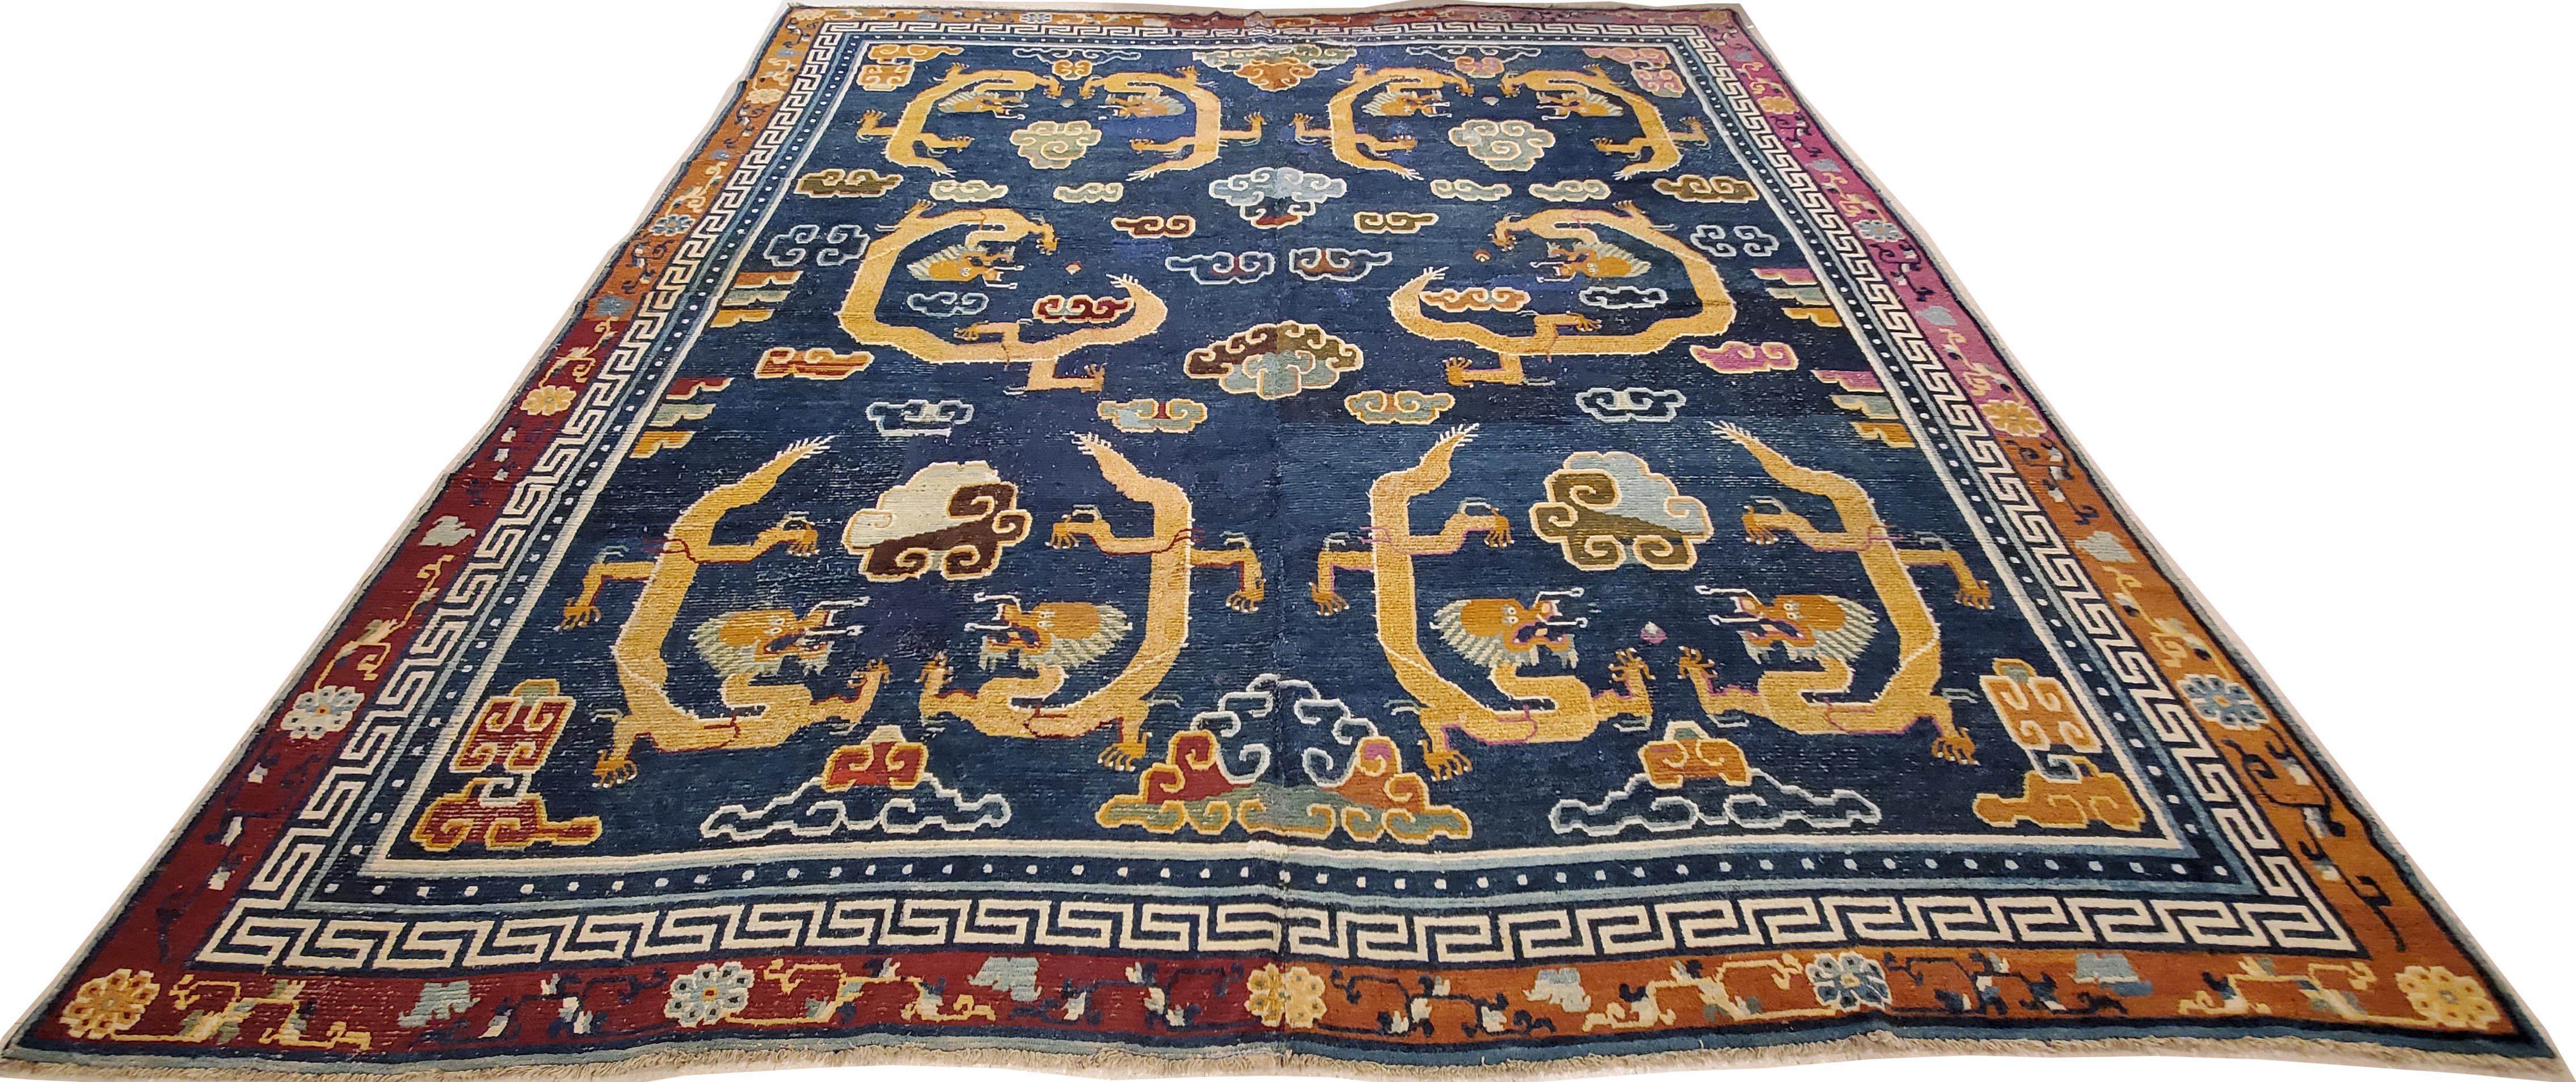 Antique Tibetan Carpet, Circa 1880 Handmade Oriental Rug, Blue, Gold, Tan, Cream 1